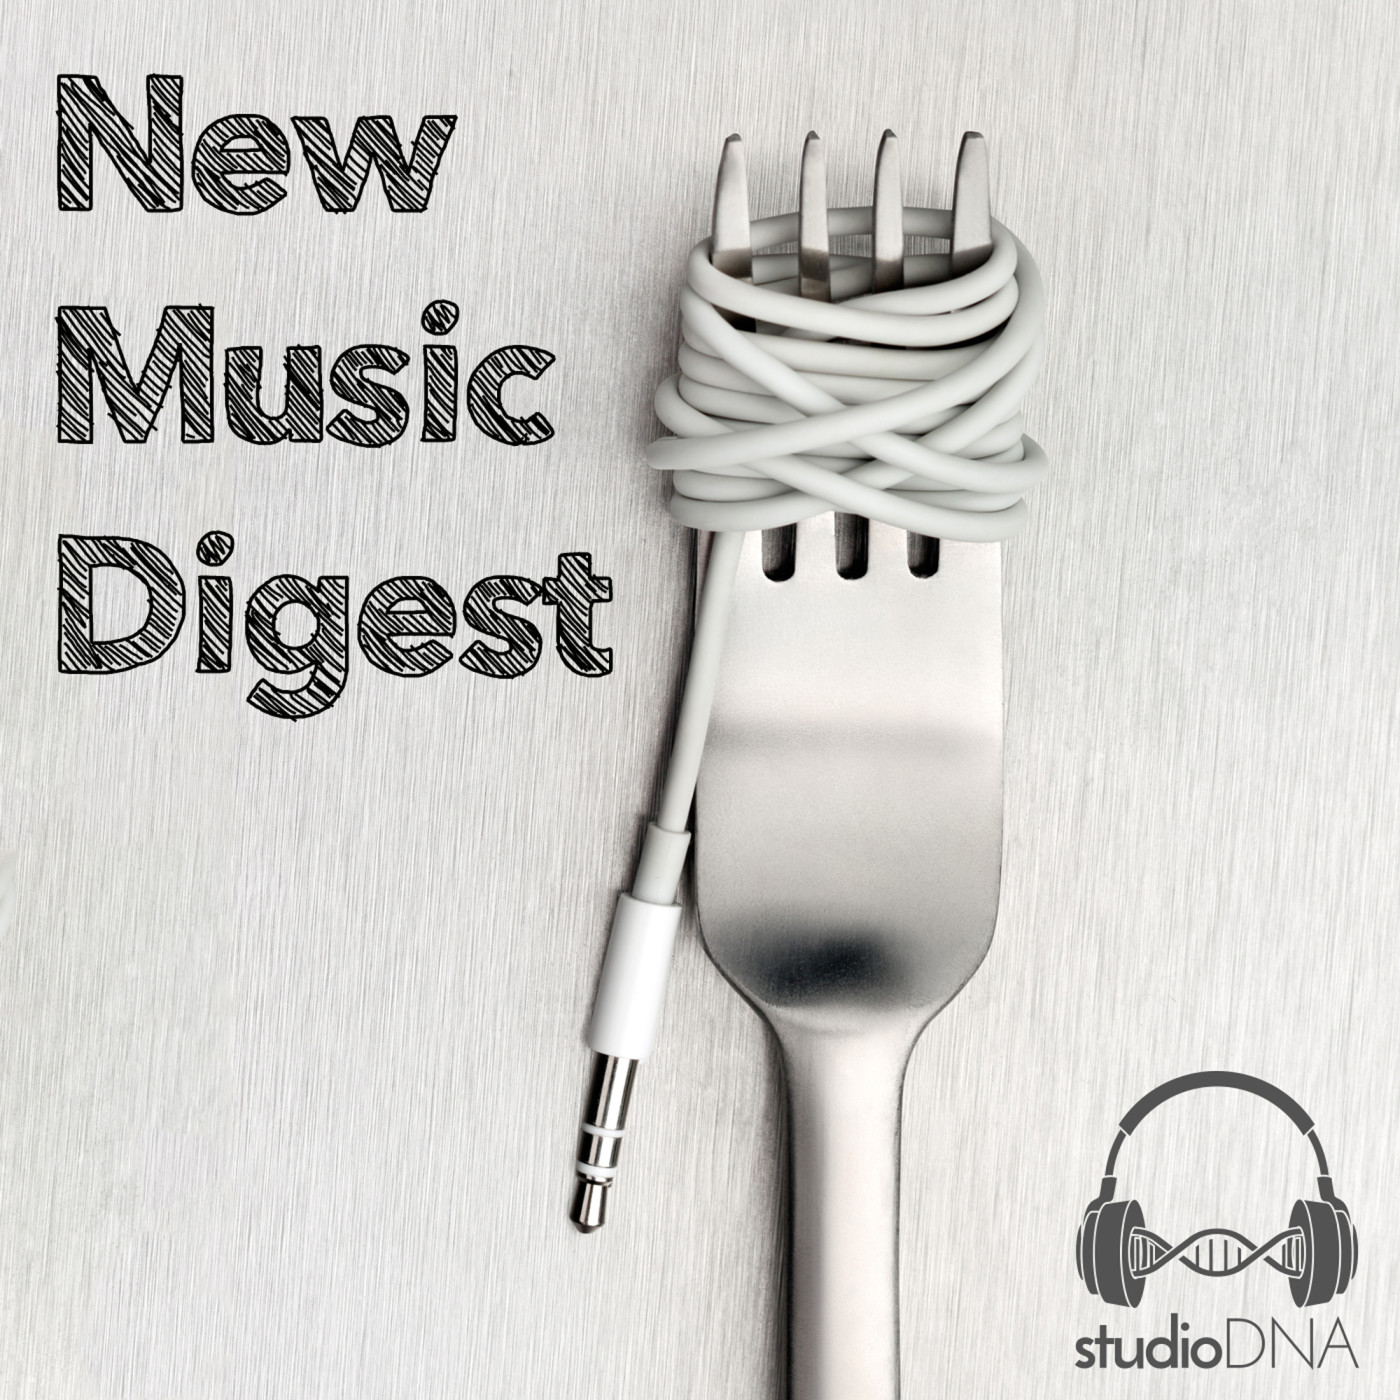 New Music Digest